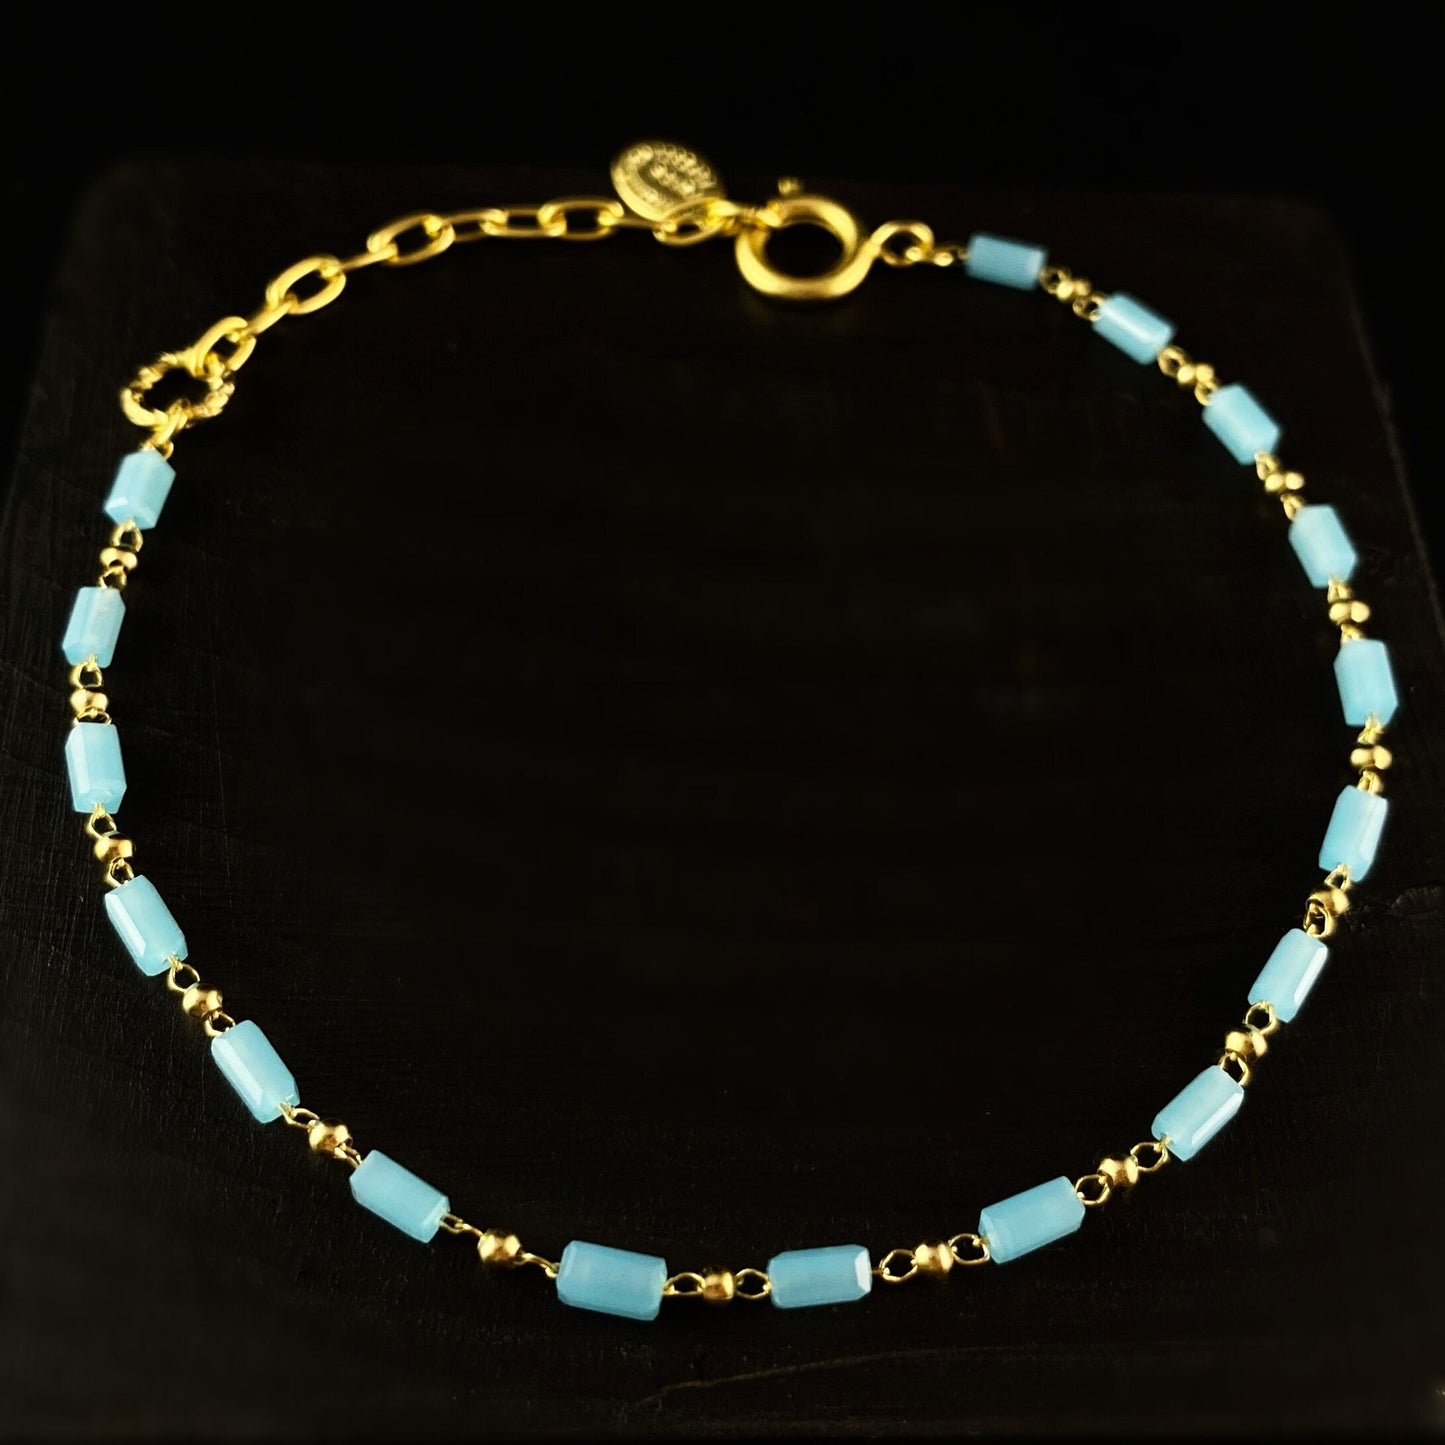 Dainty Blue Glass Bead Bracelet - La Vie Parisienne by Catherine Popesco